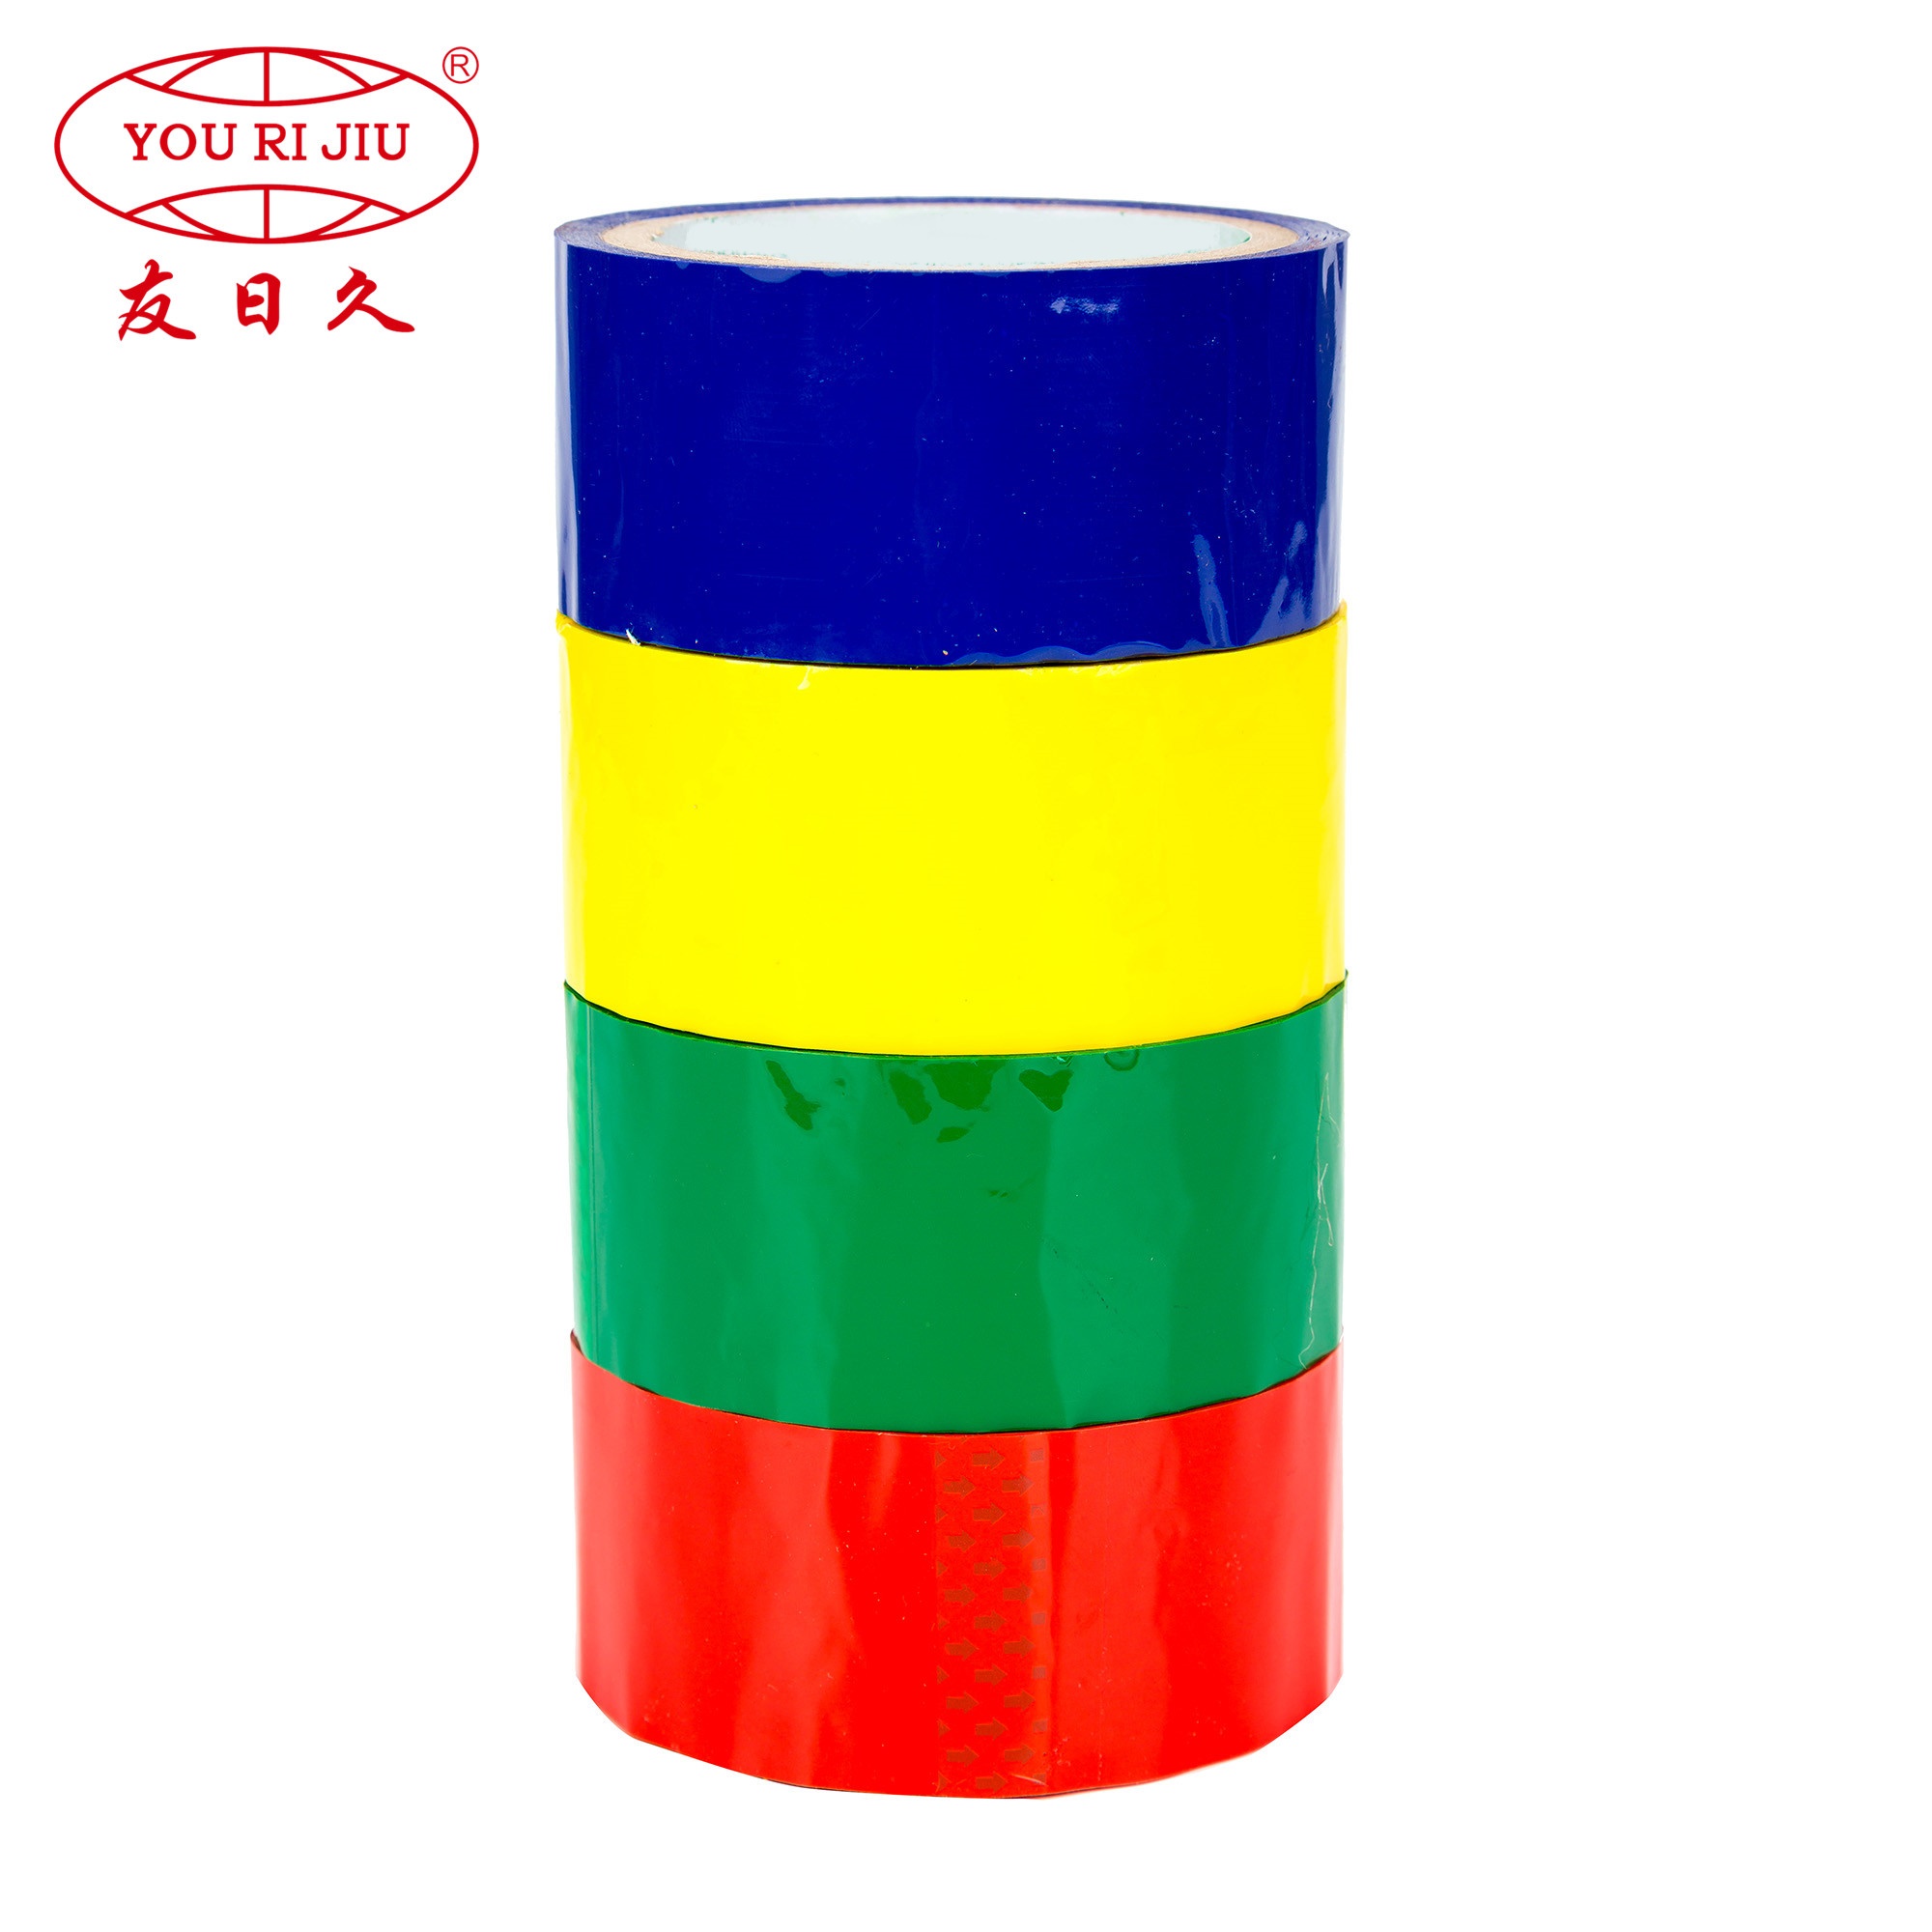 Yourijiu bopp tape factory price for carton sealing-1